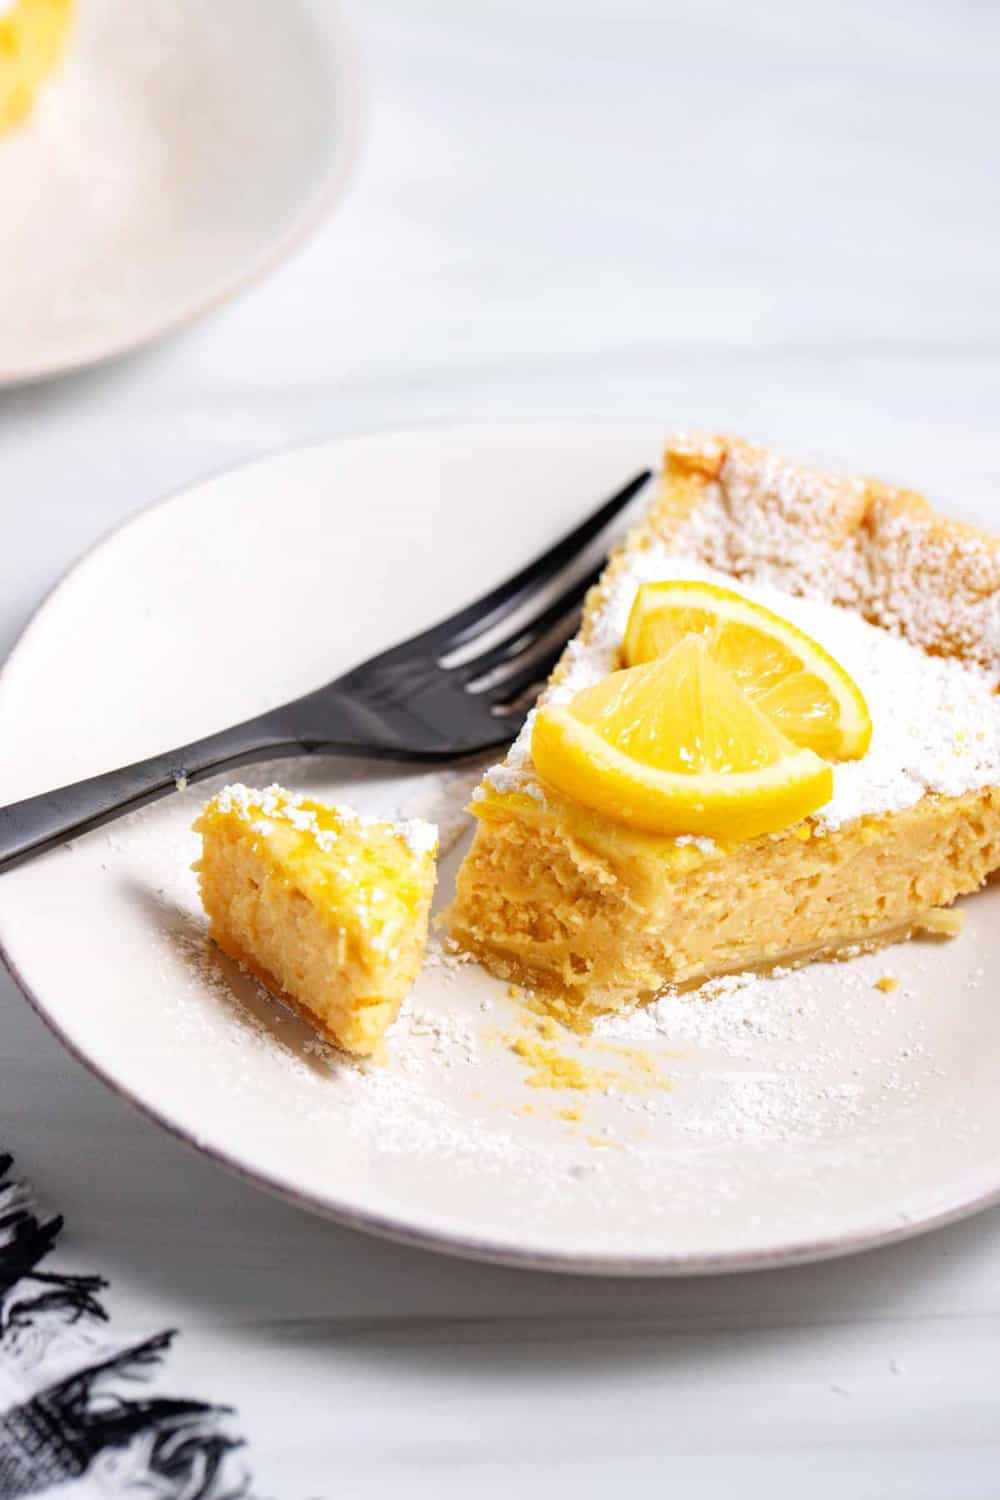 A slice of Arizona sunshine lemon pie on plate with fork.